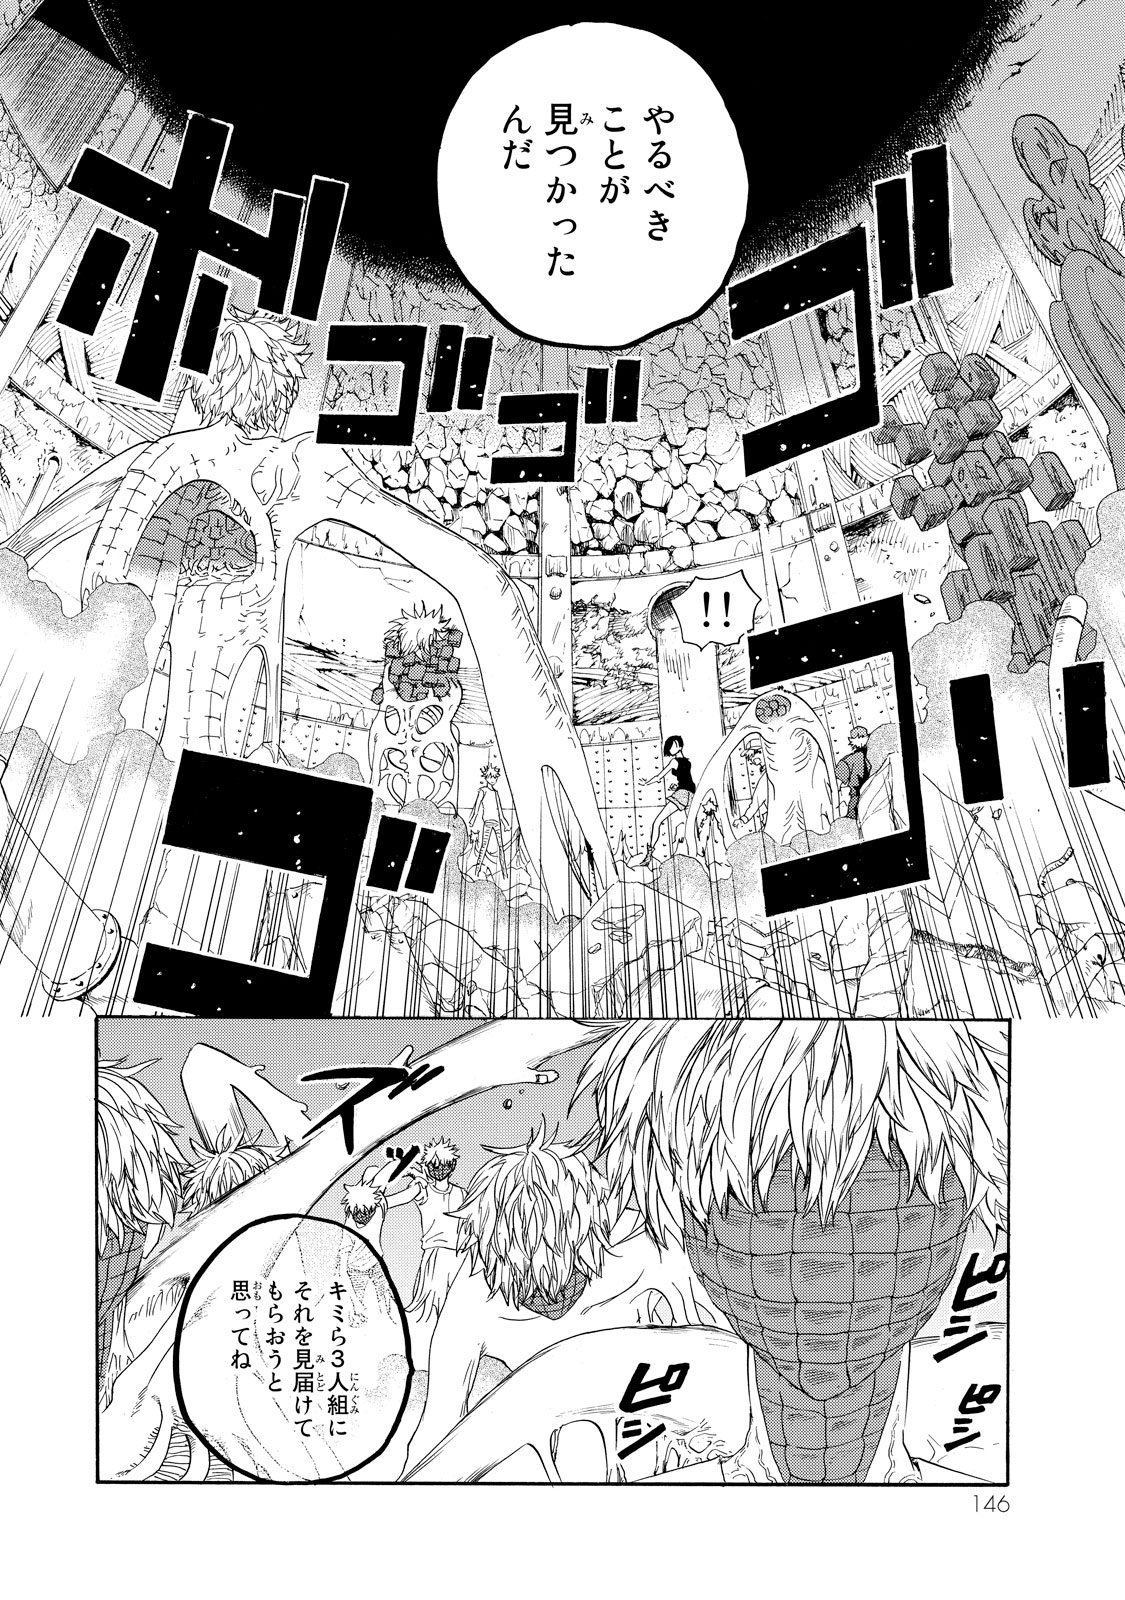 Hataraku Saibou - Chapter 24 - Page 6